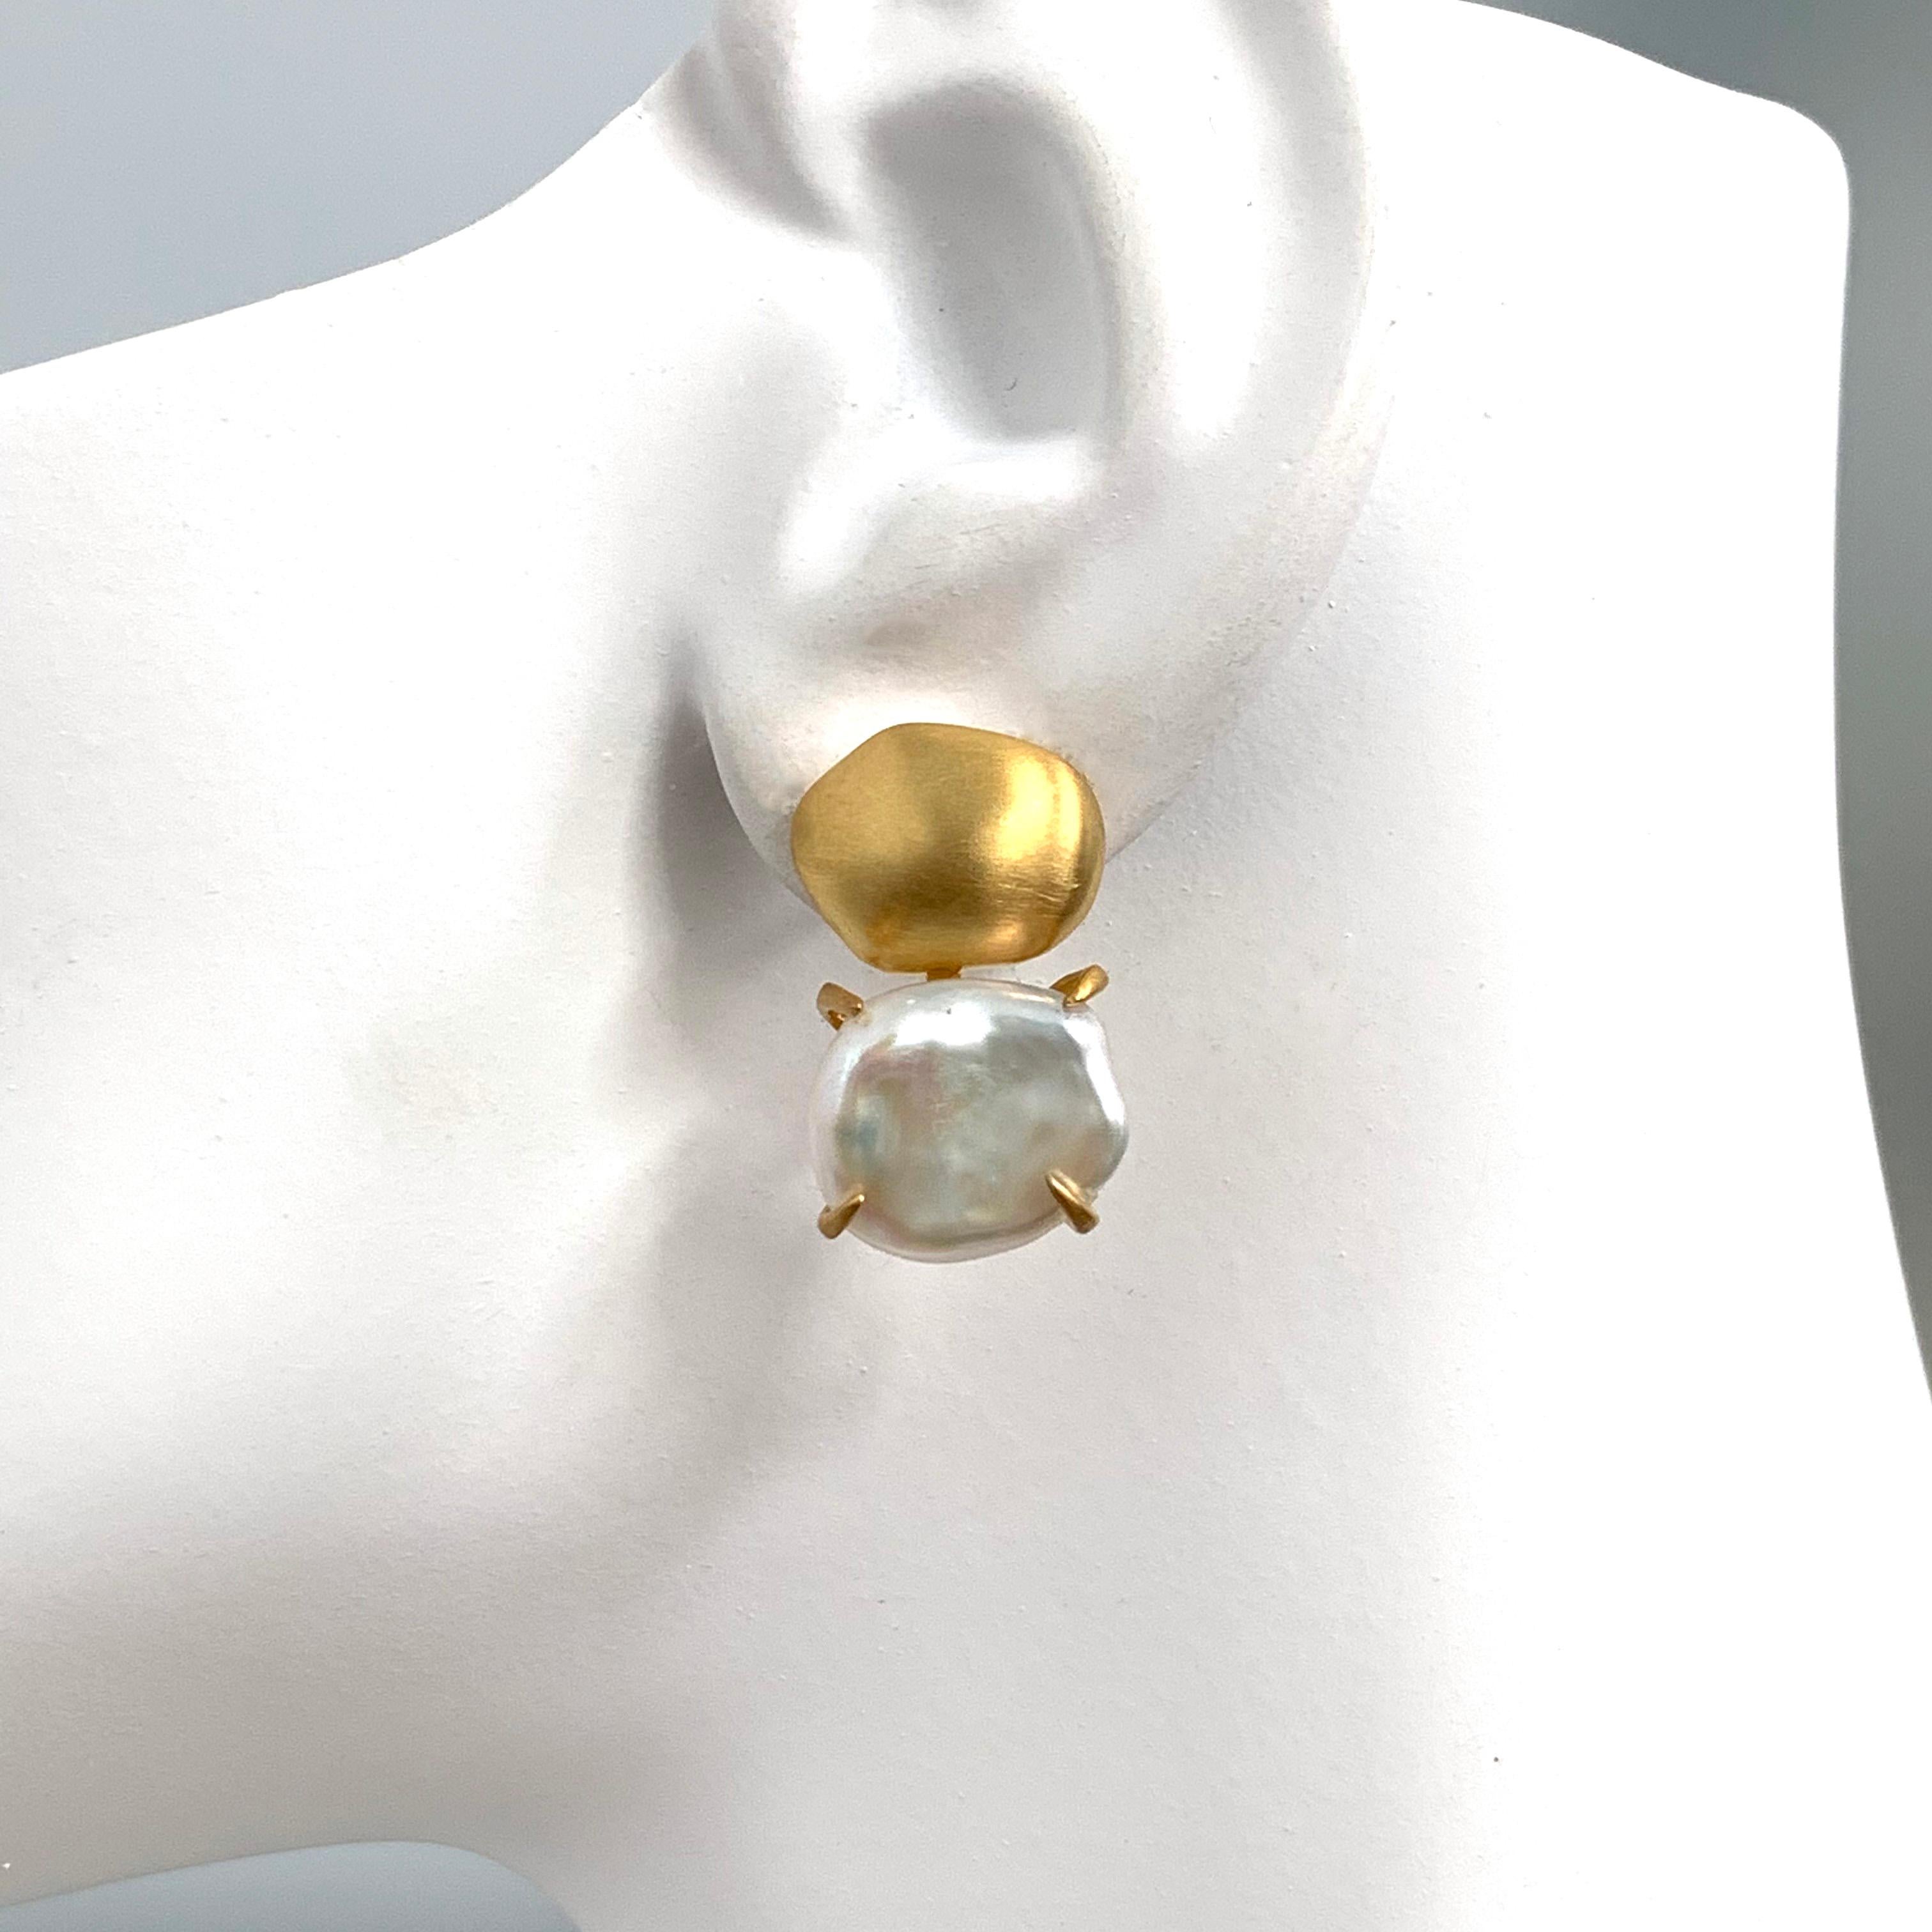 Uncut Vermeil Nugget and Cultured Baroque Pearl Earrings